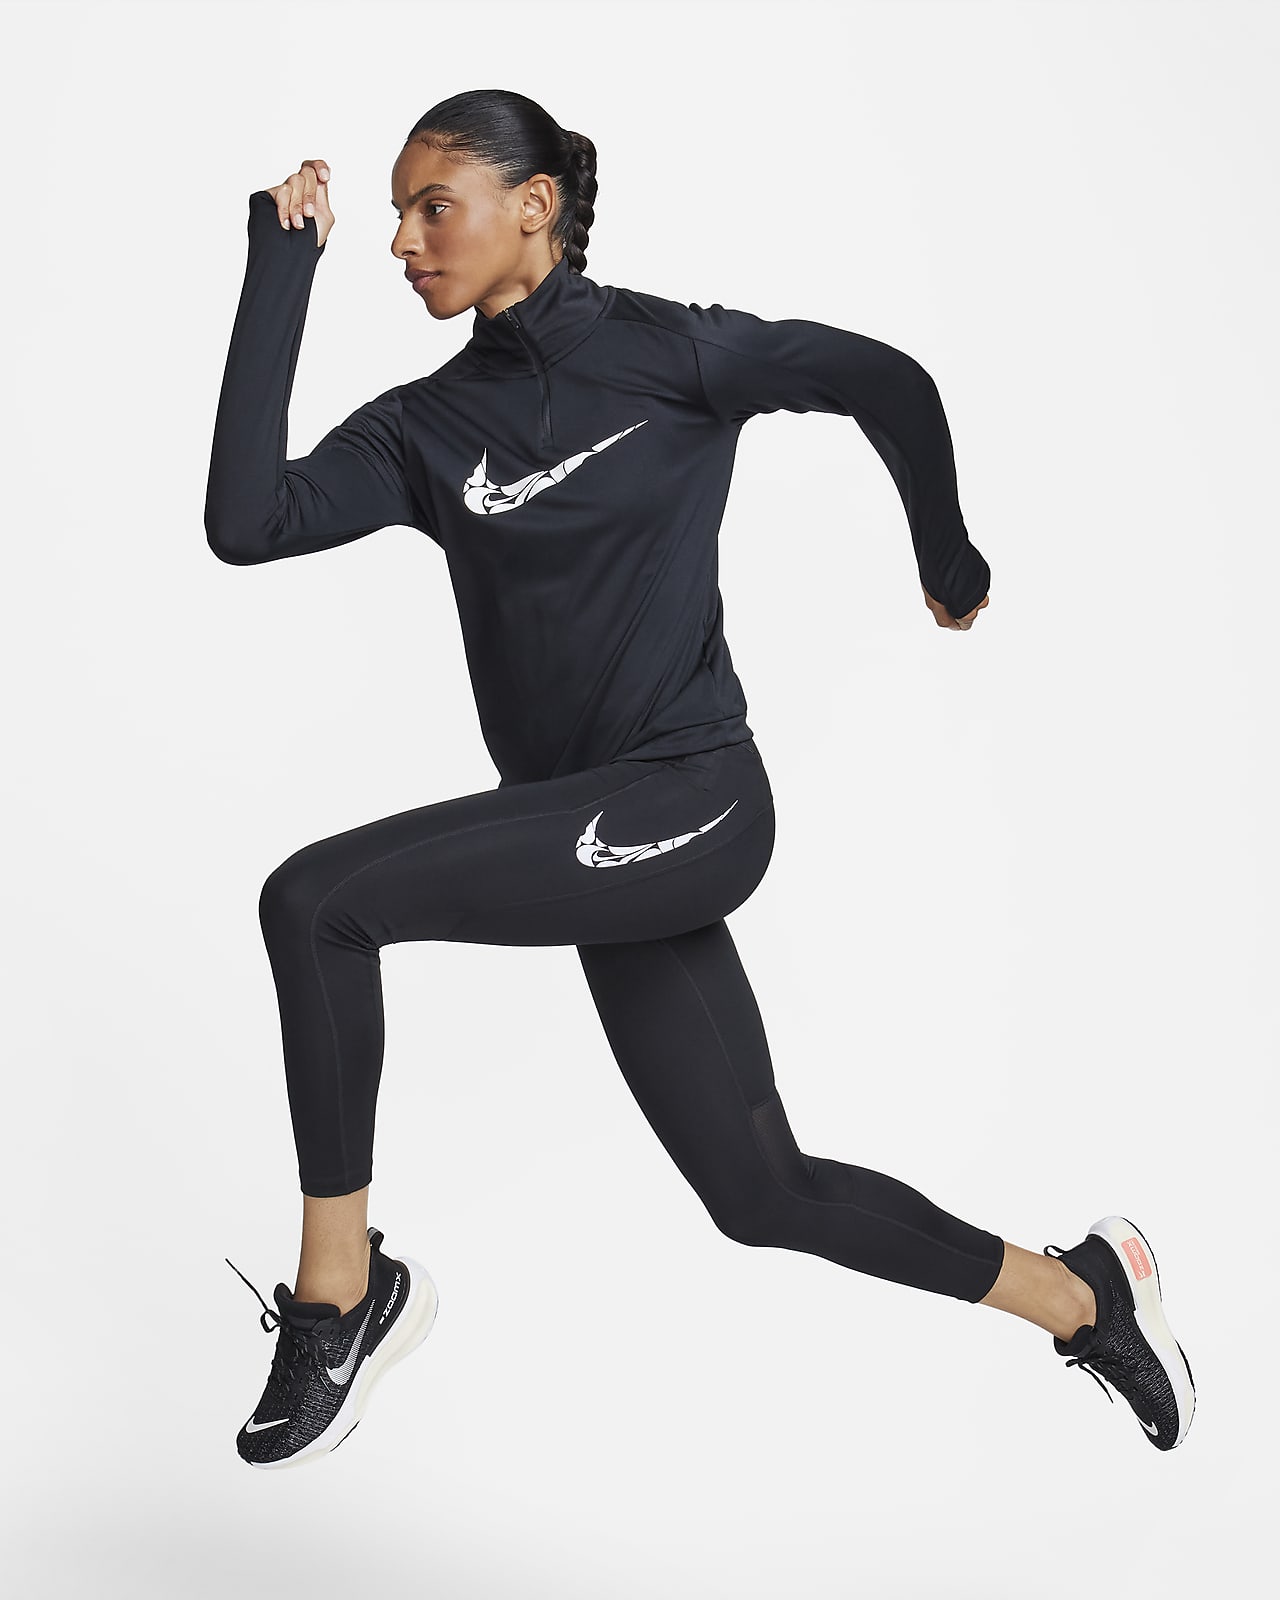 Nike Air Womens 7/8 Logo Prints Running Leggings DJ0899-010 Black